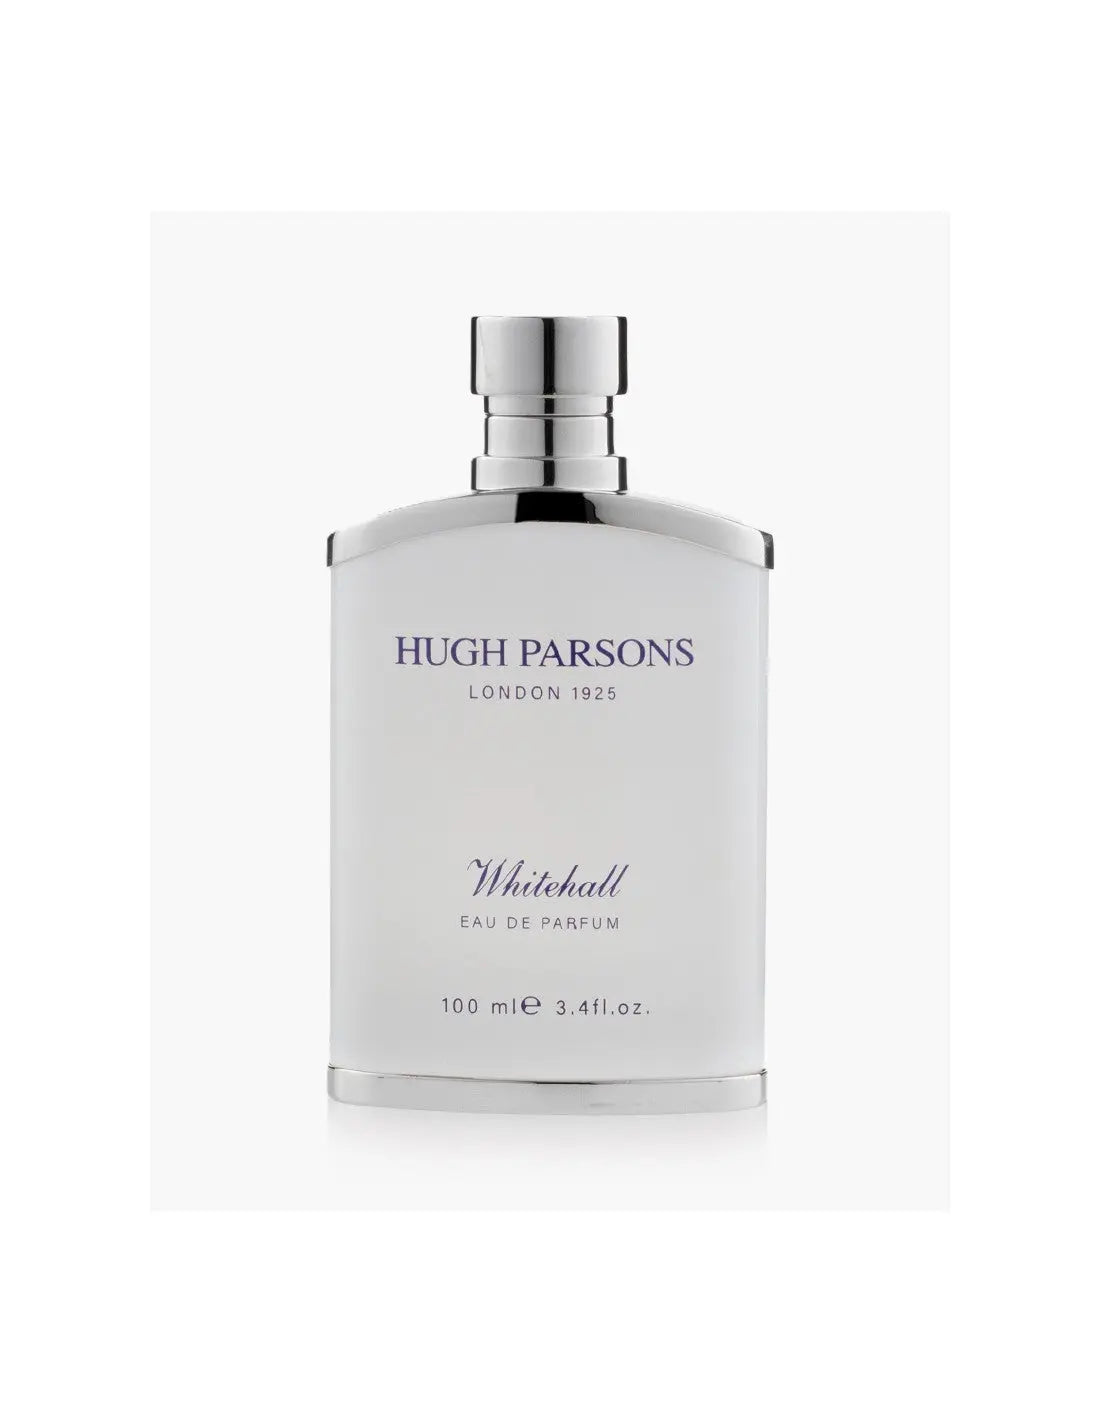 Hugh parsons Whitehall – 100 ml